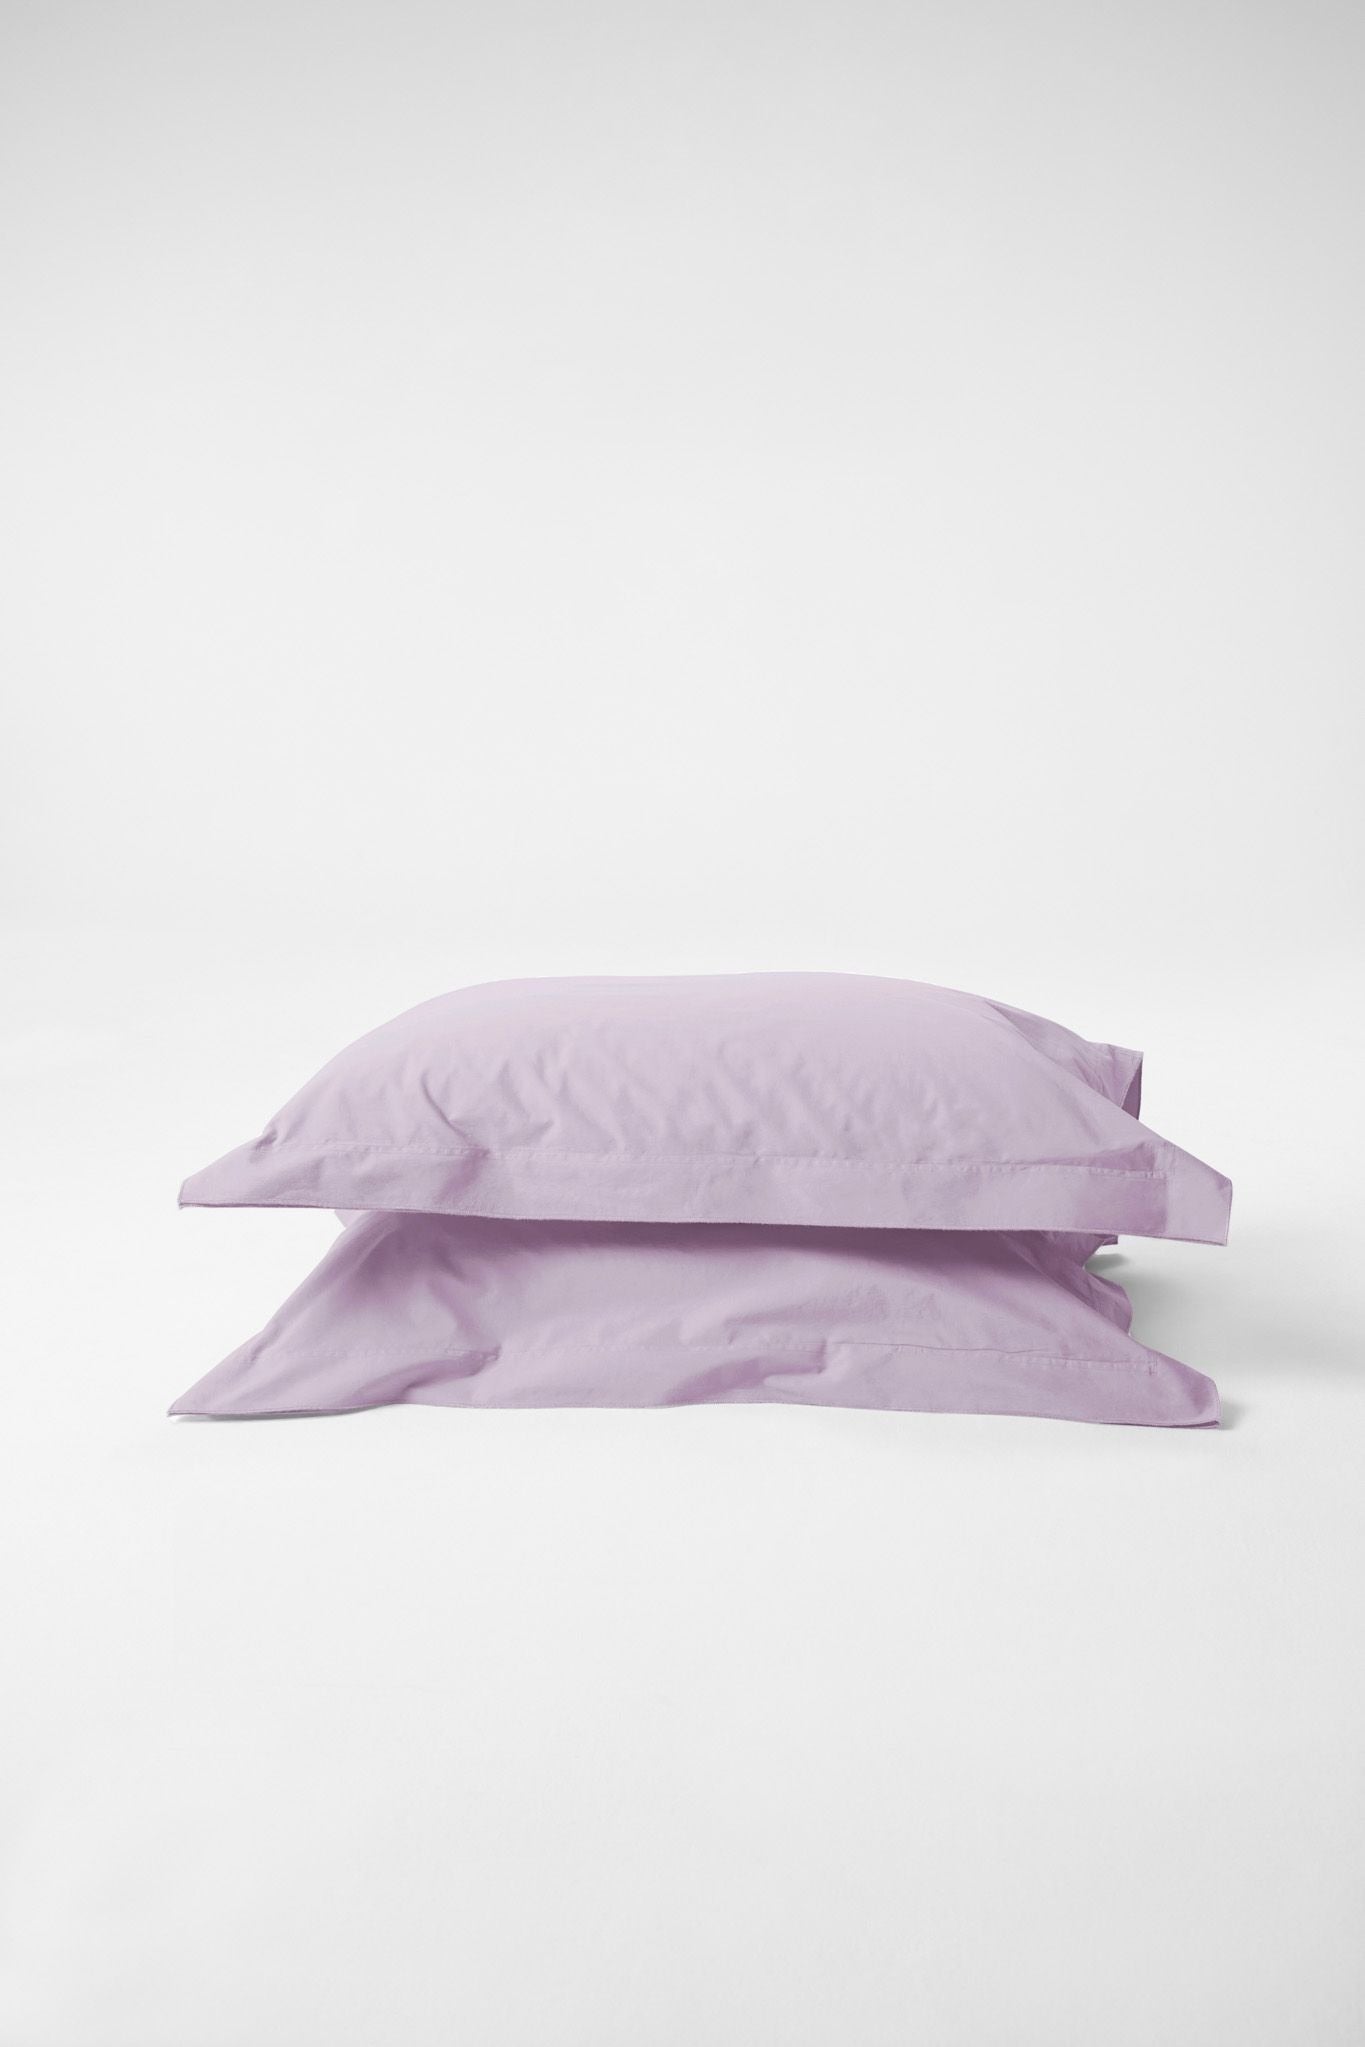 Mono Organic Cotton Percale Pillow Pair - Lilac Pillows in Standard Pillow